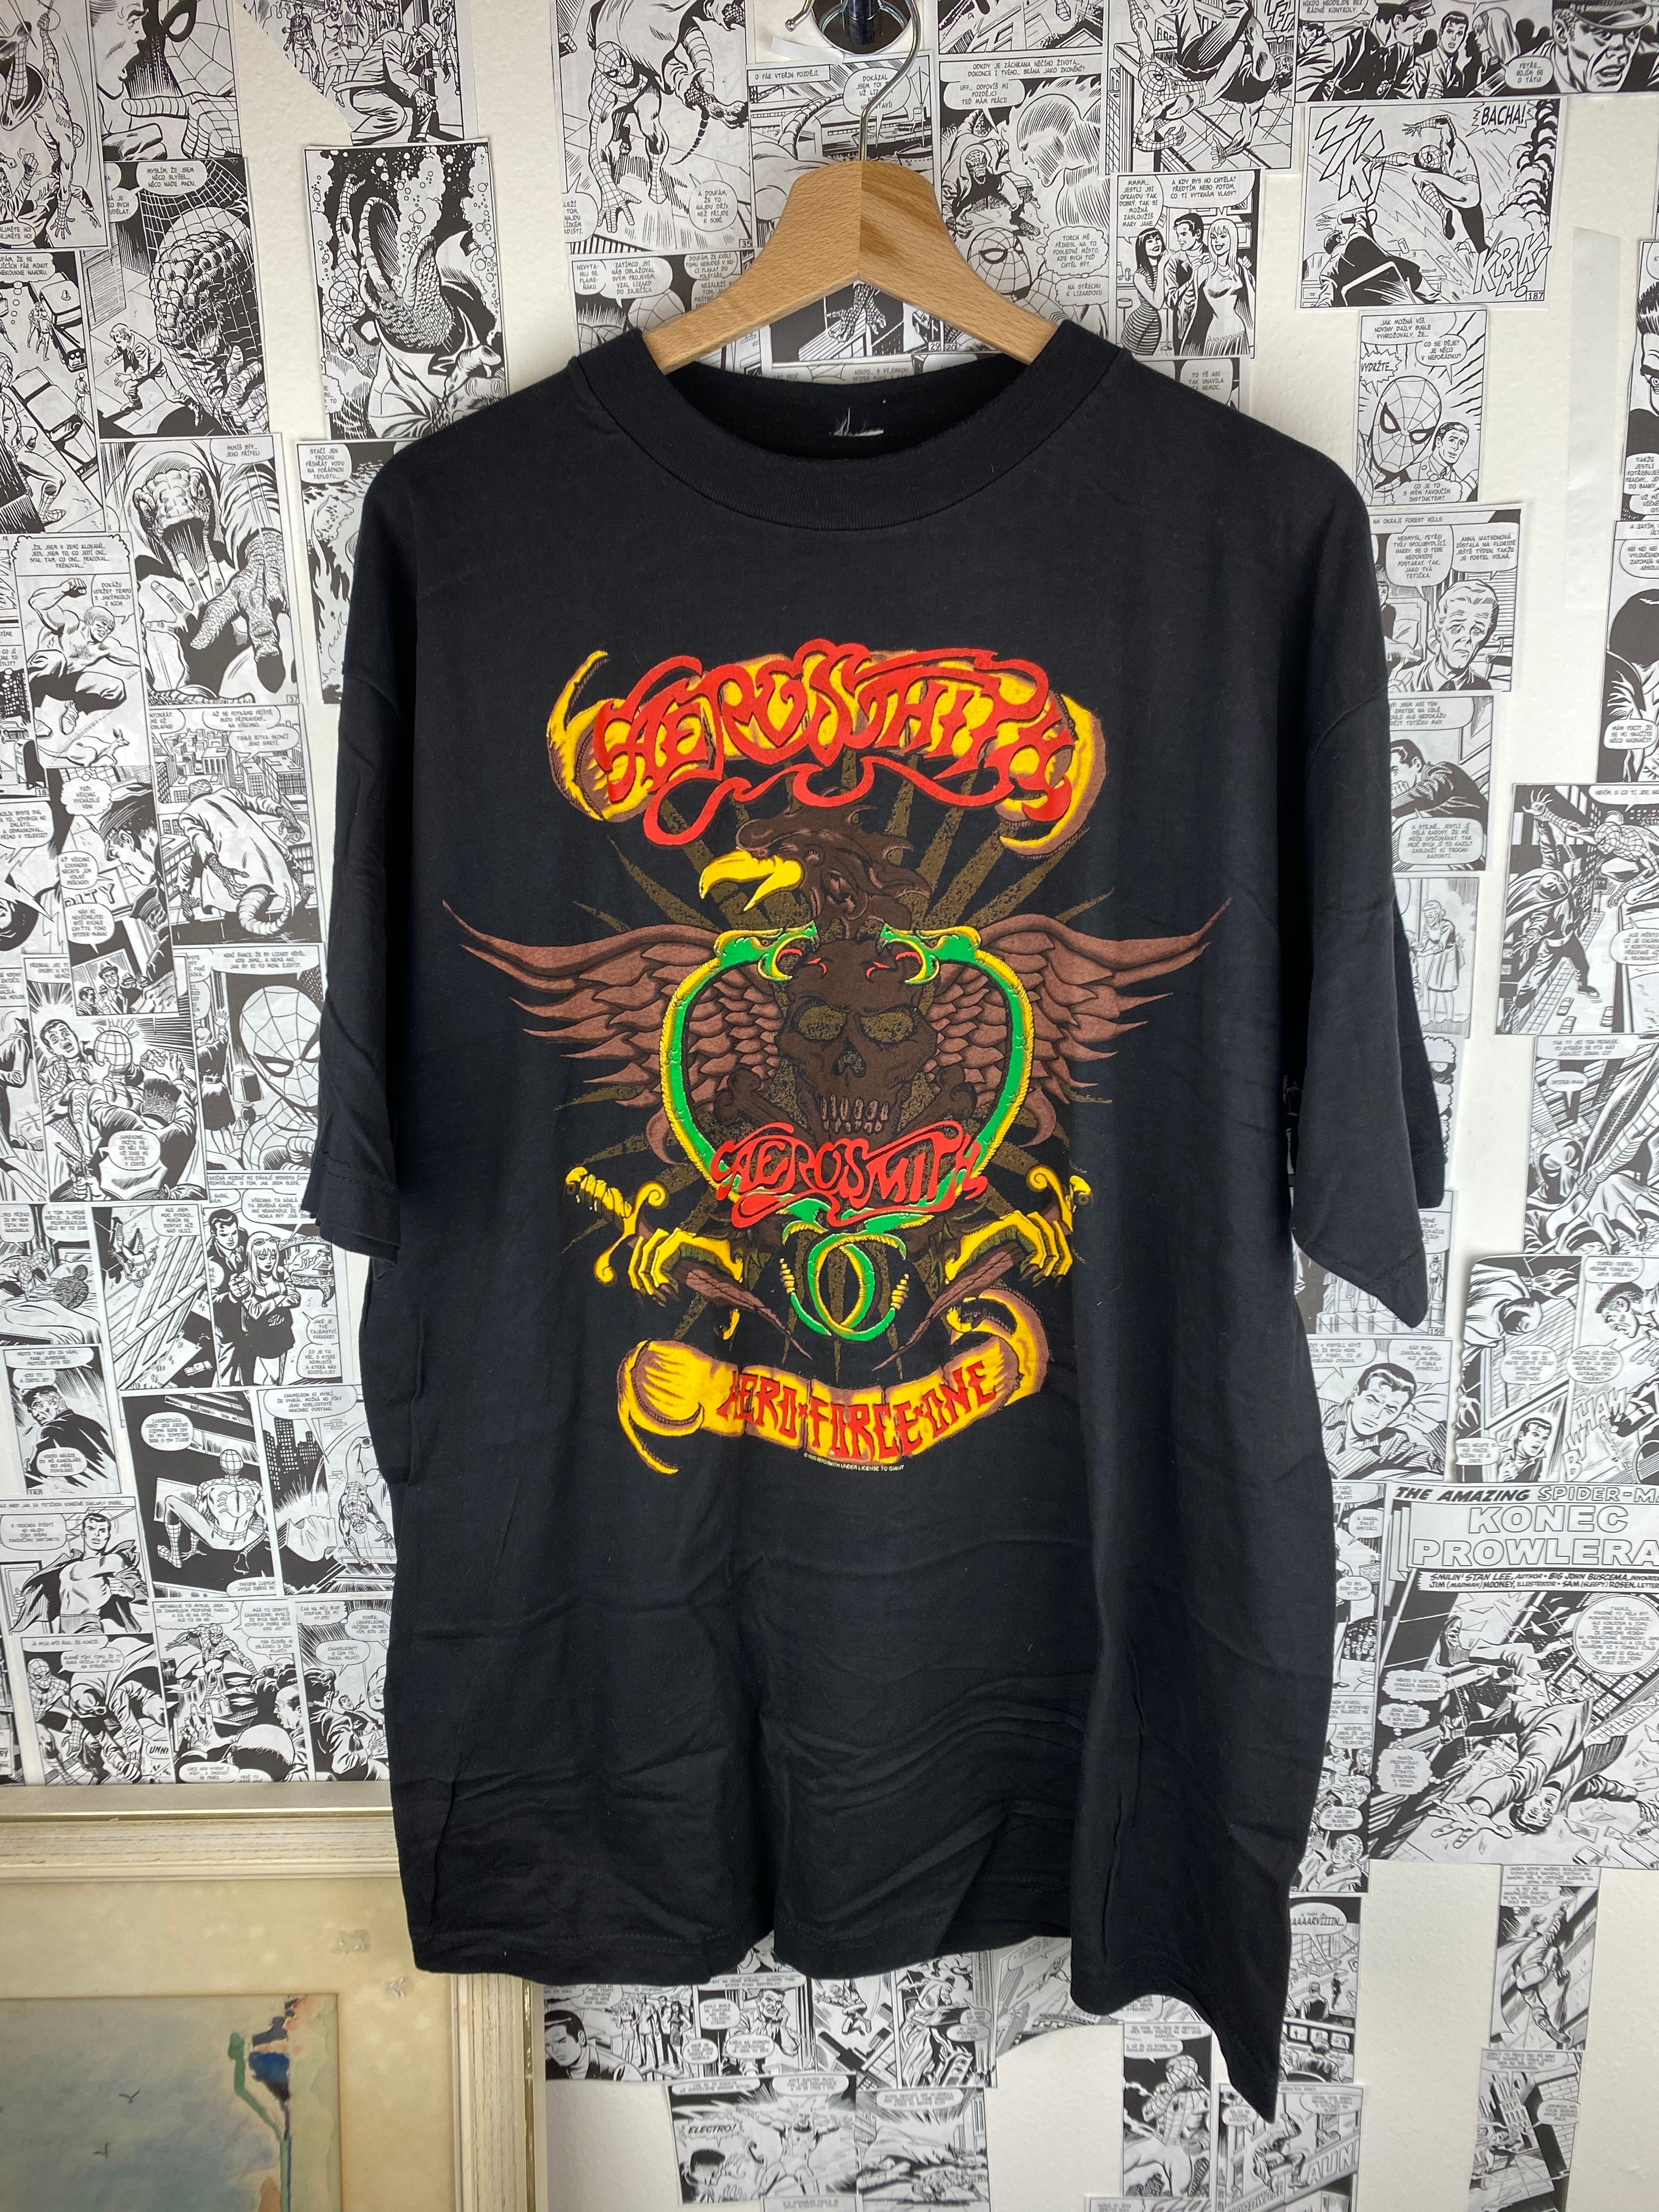 Vintage Aerosmith 1993 tour t-shirt - size XL